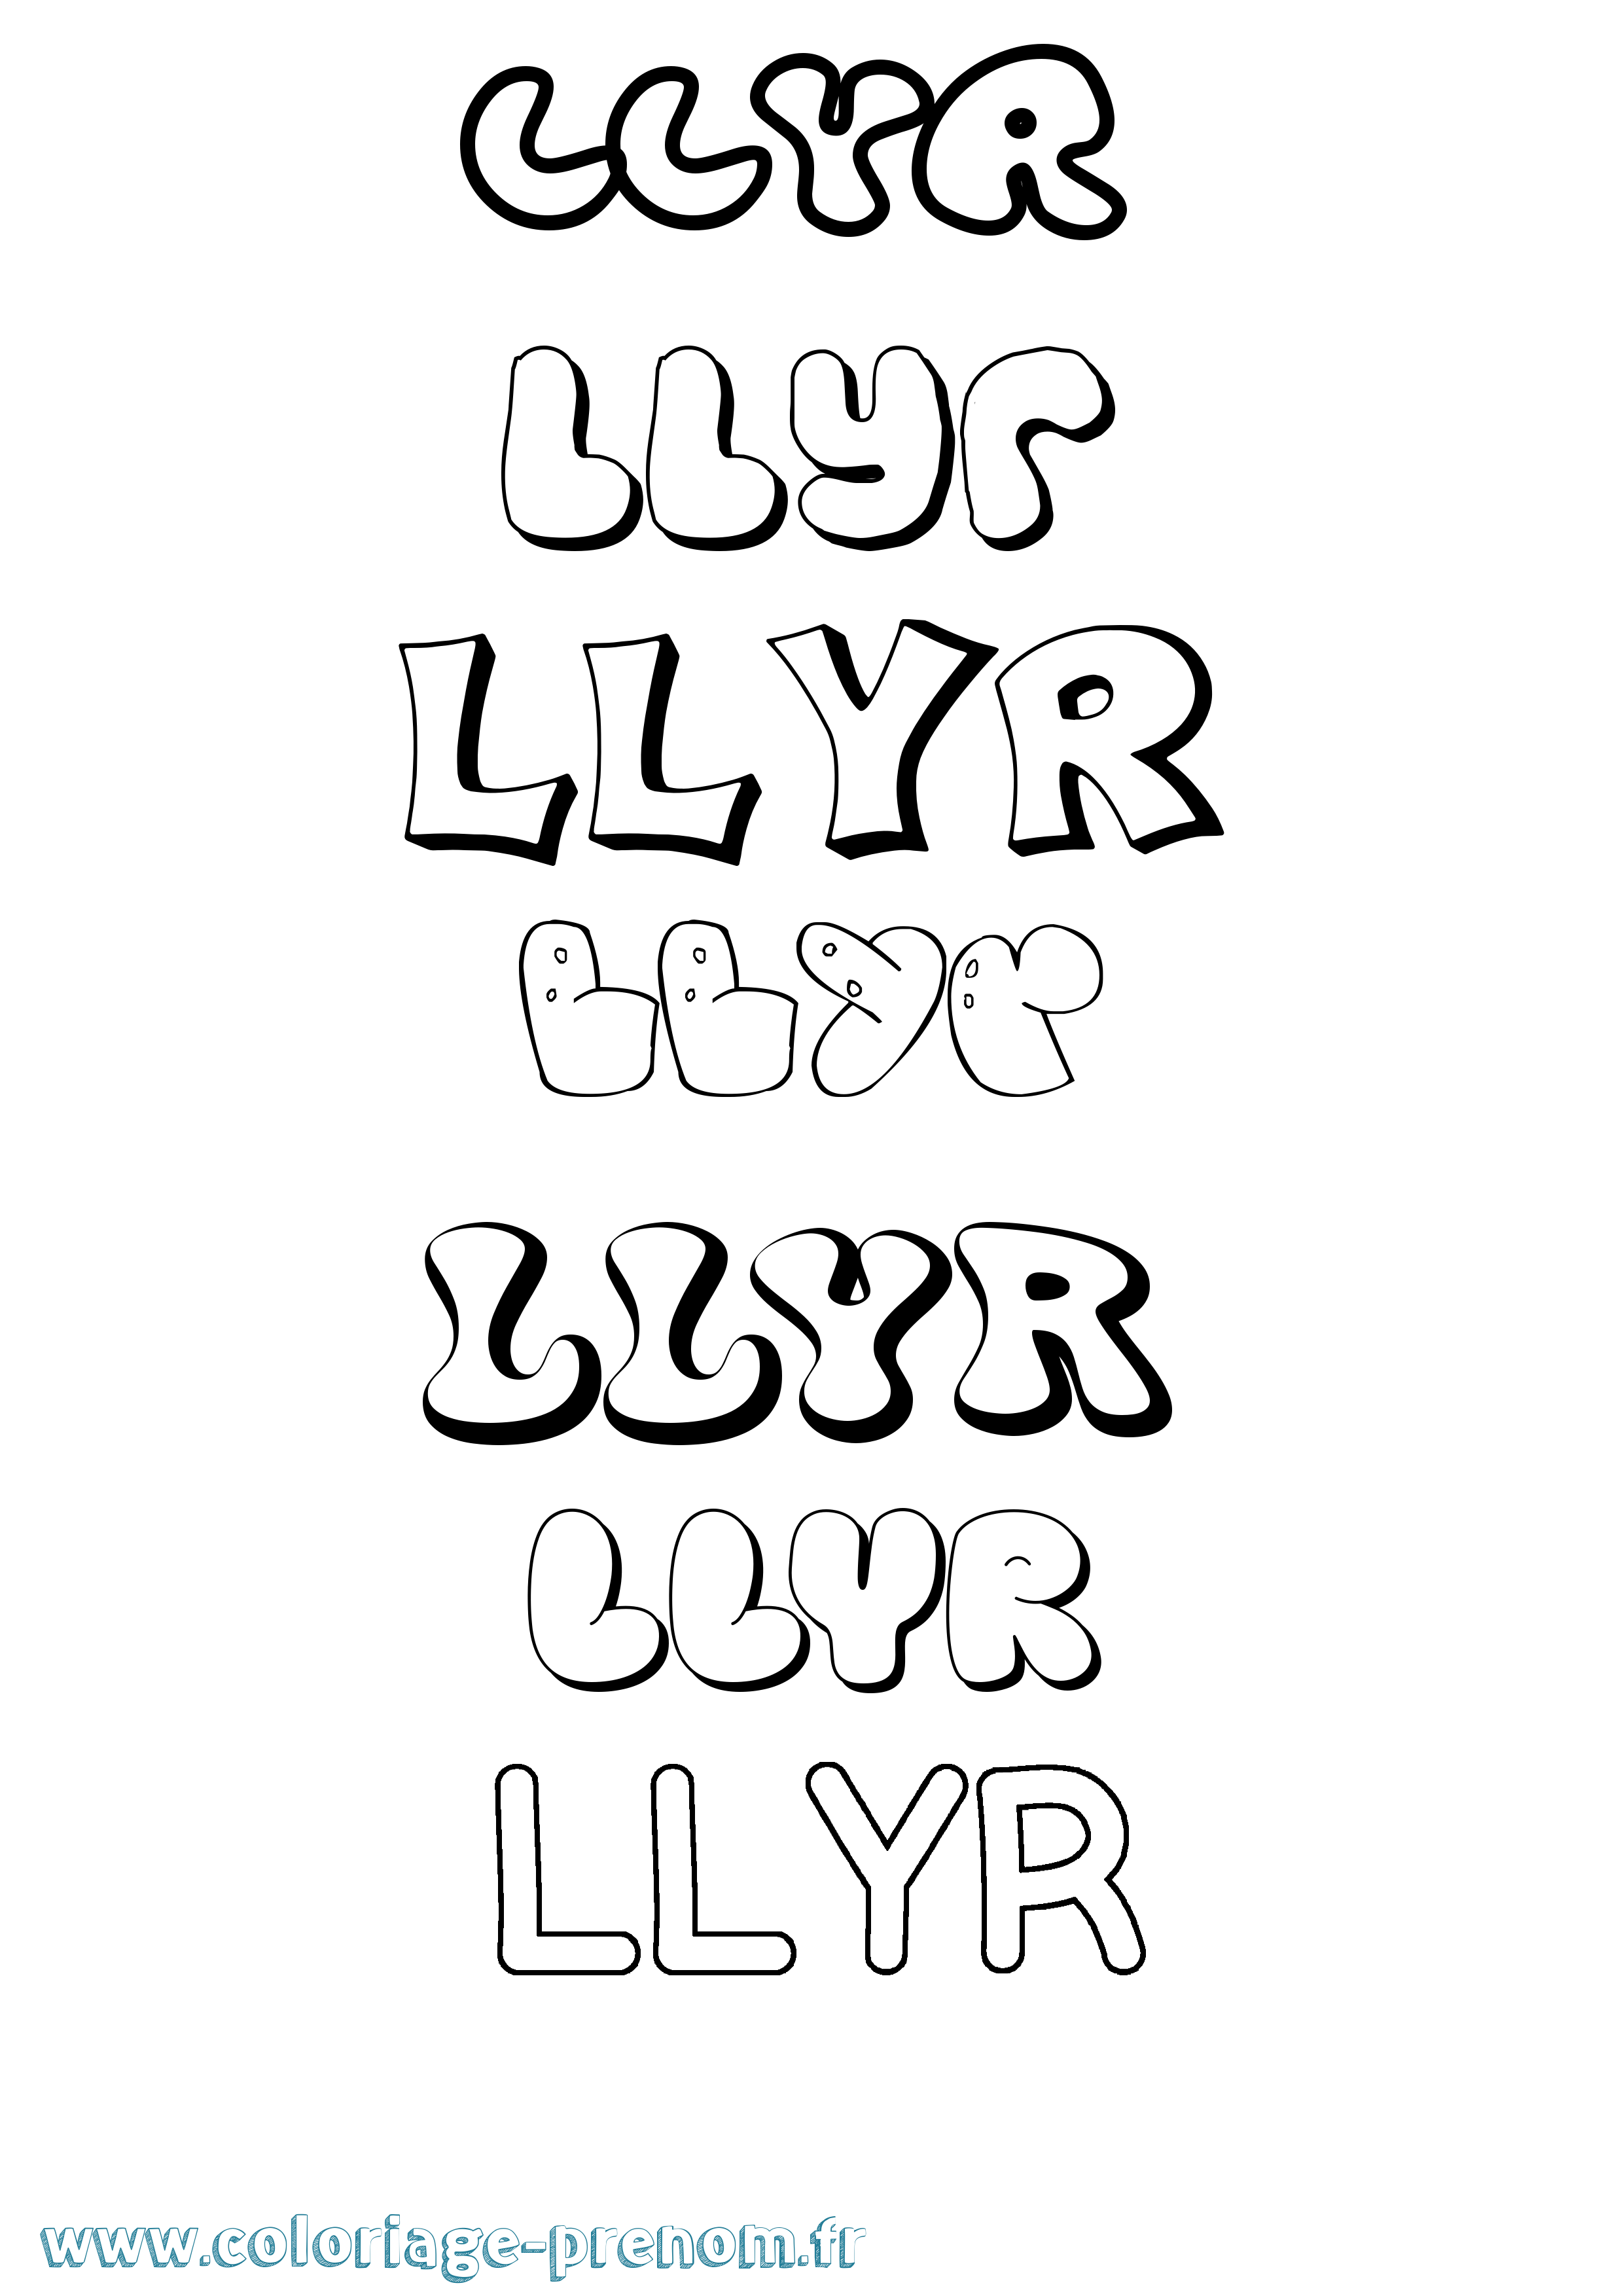 Coloriage prénom Llyr Bubble